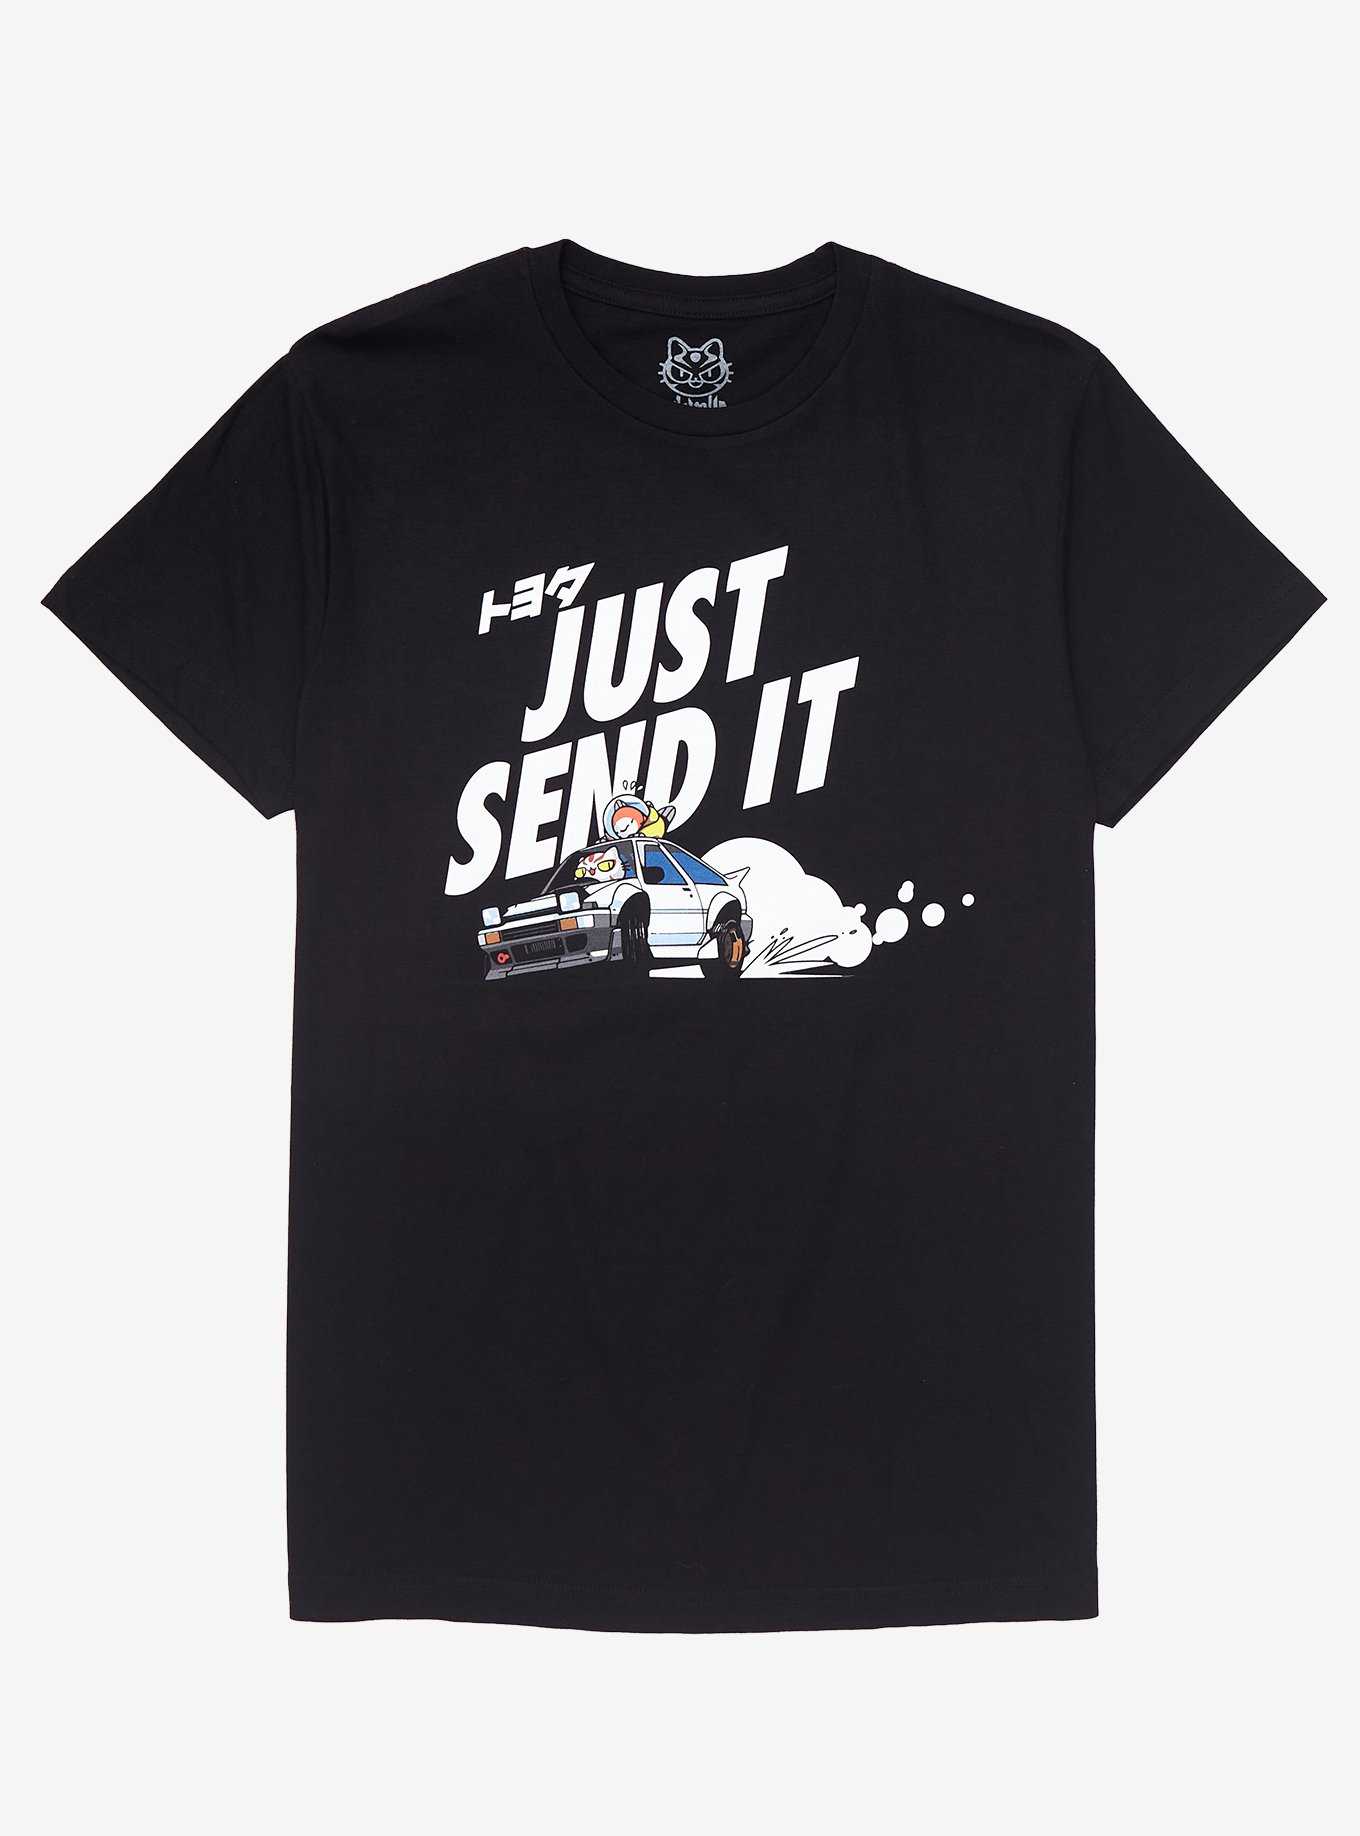 Just Send It Drifting T-Shirt By Shinya, , hi-res